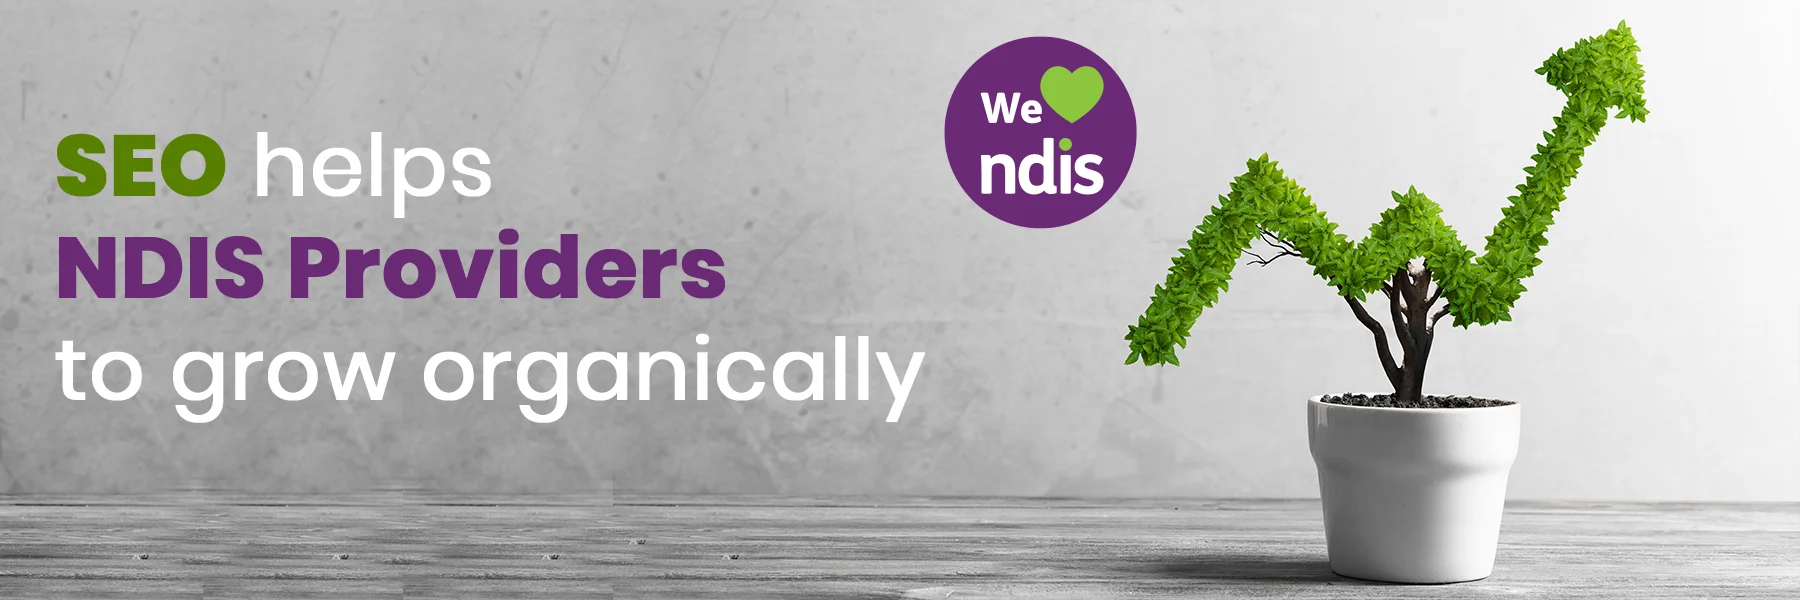 SEO helps NDIS Providers to grow organically